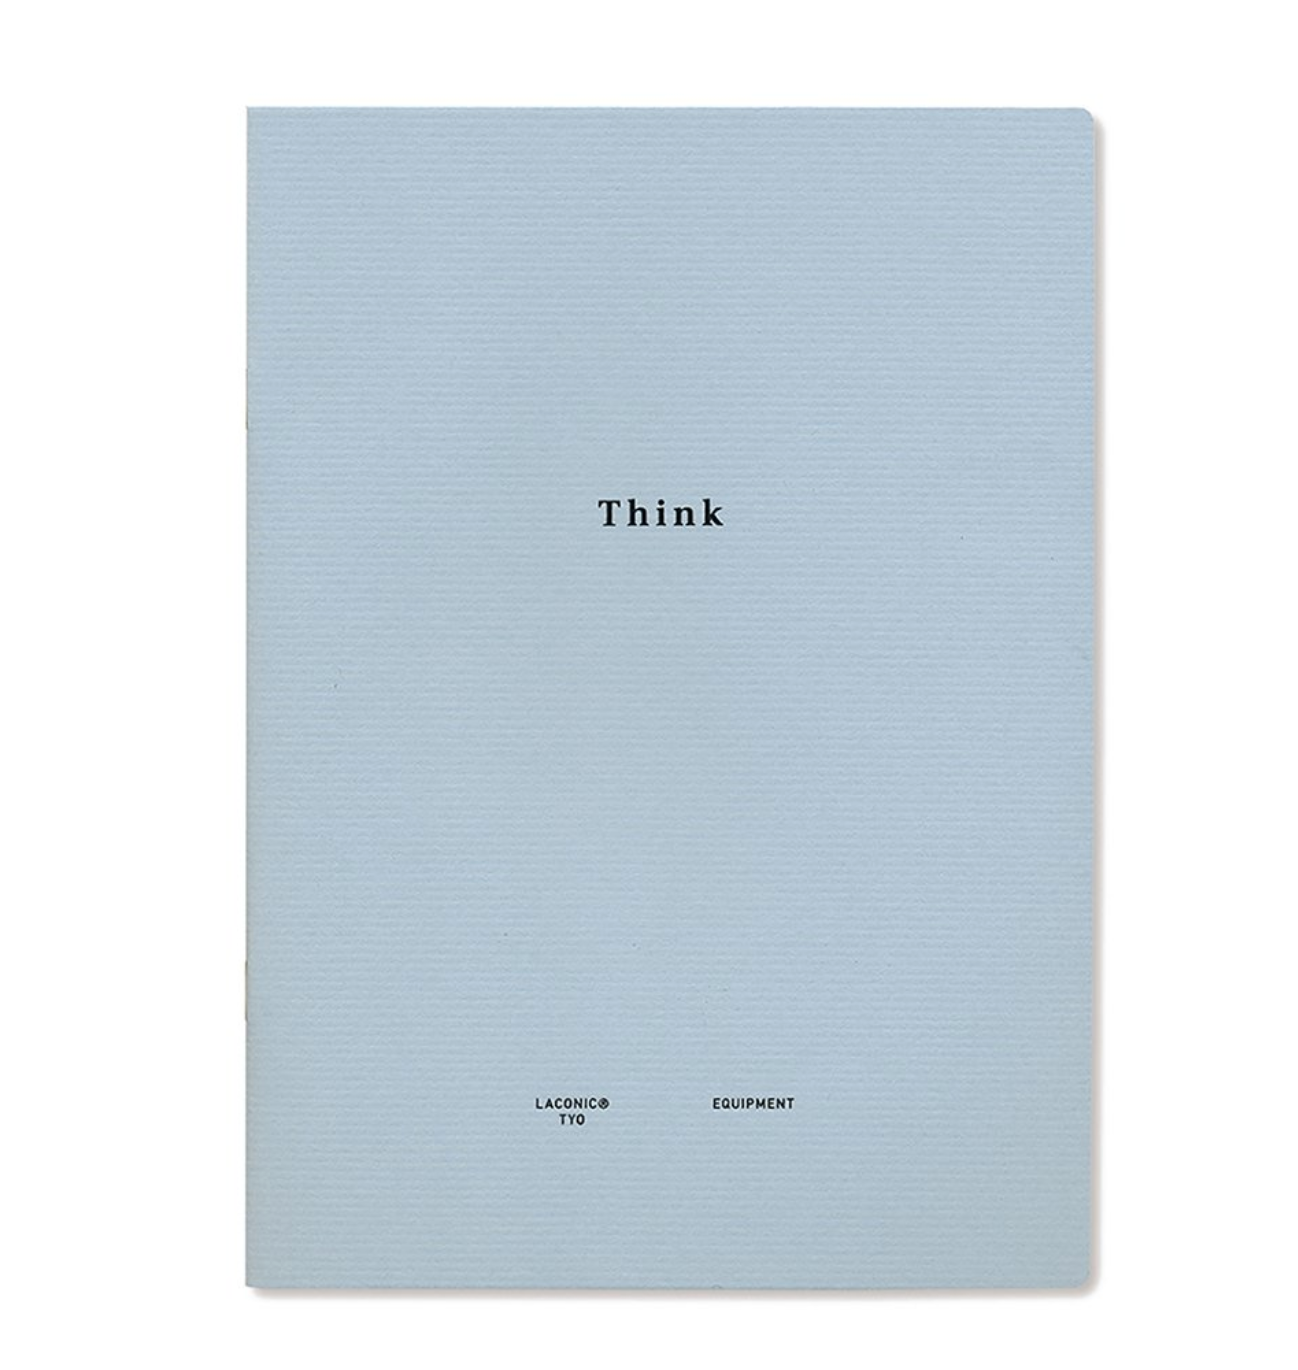 Think - Laconic Stye Notebook A5